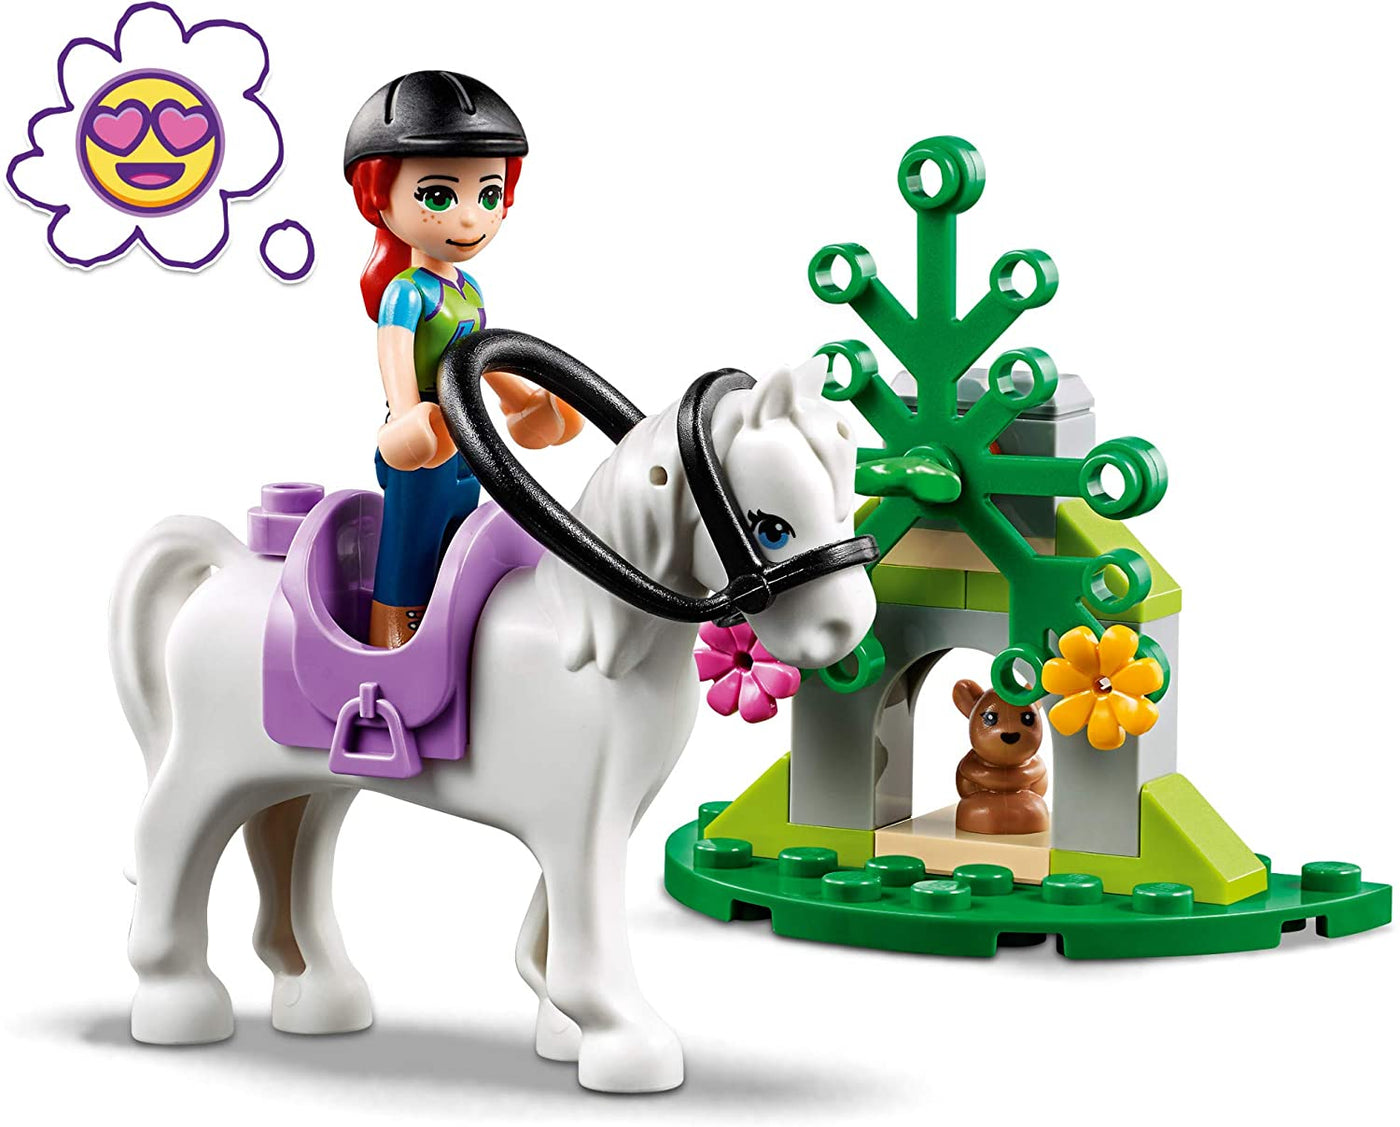 LEGO Friends Mia's Horse Trailer, 41371